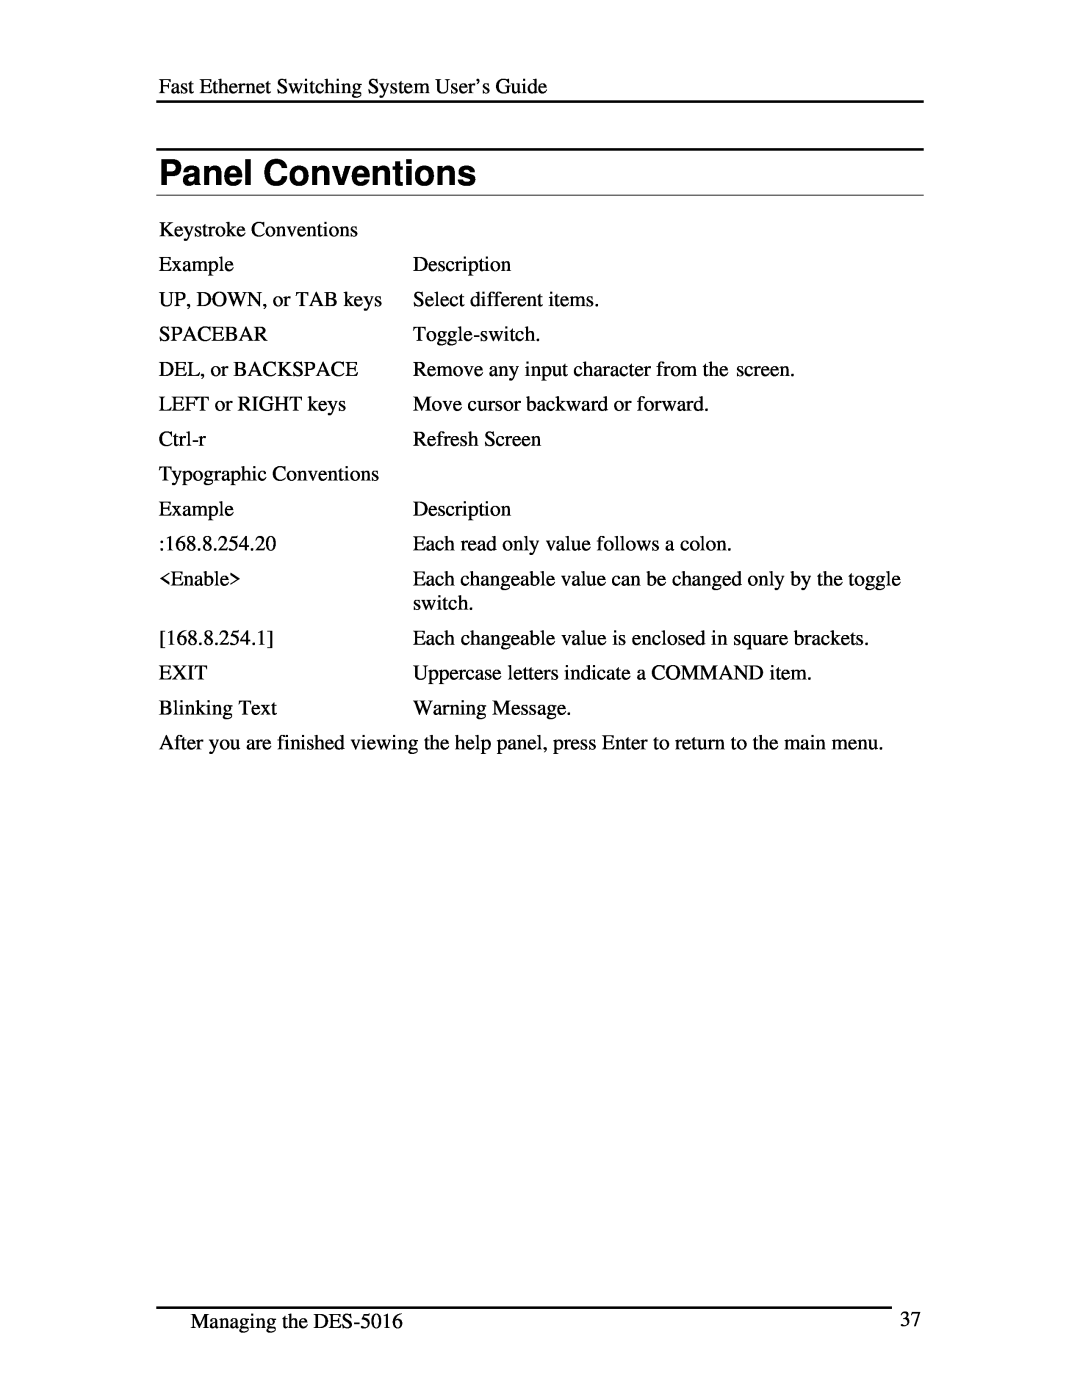 D-Link DES-5016 manual Panel Conventions 